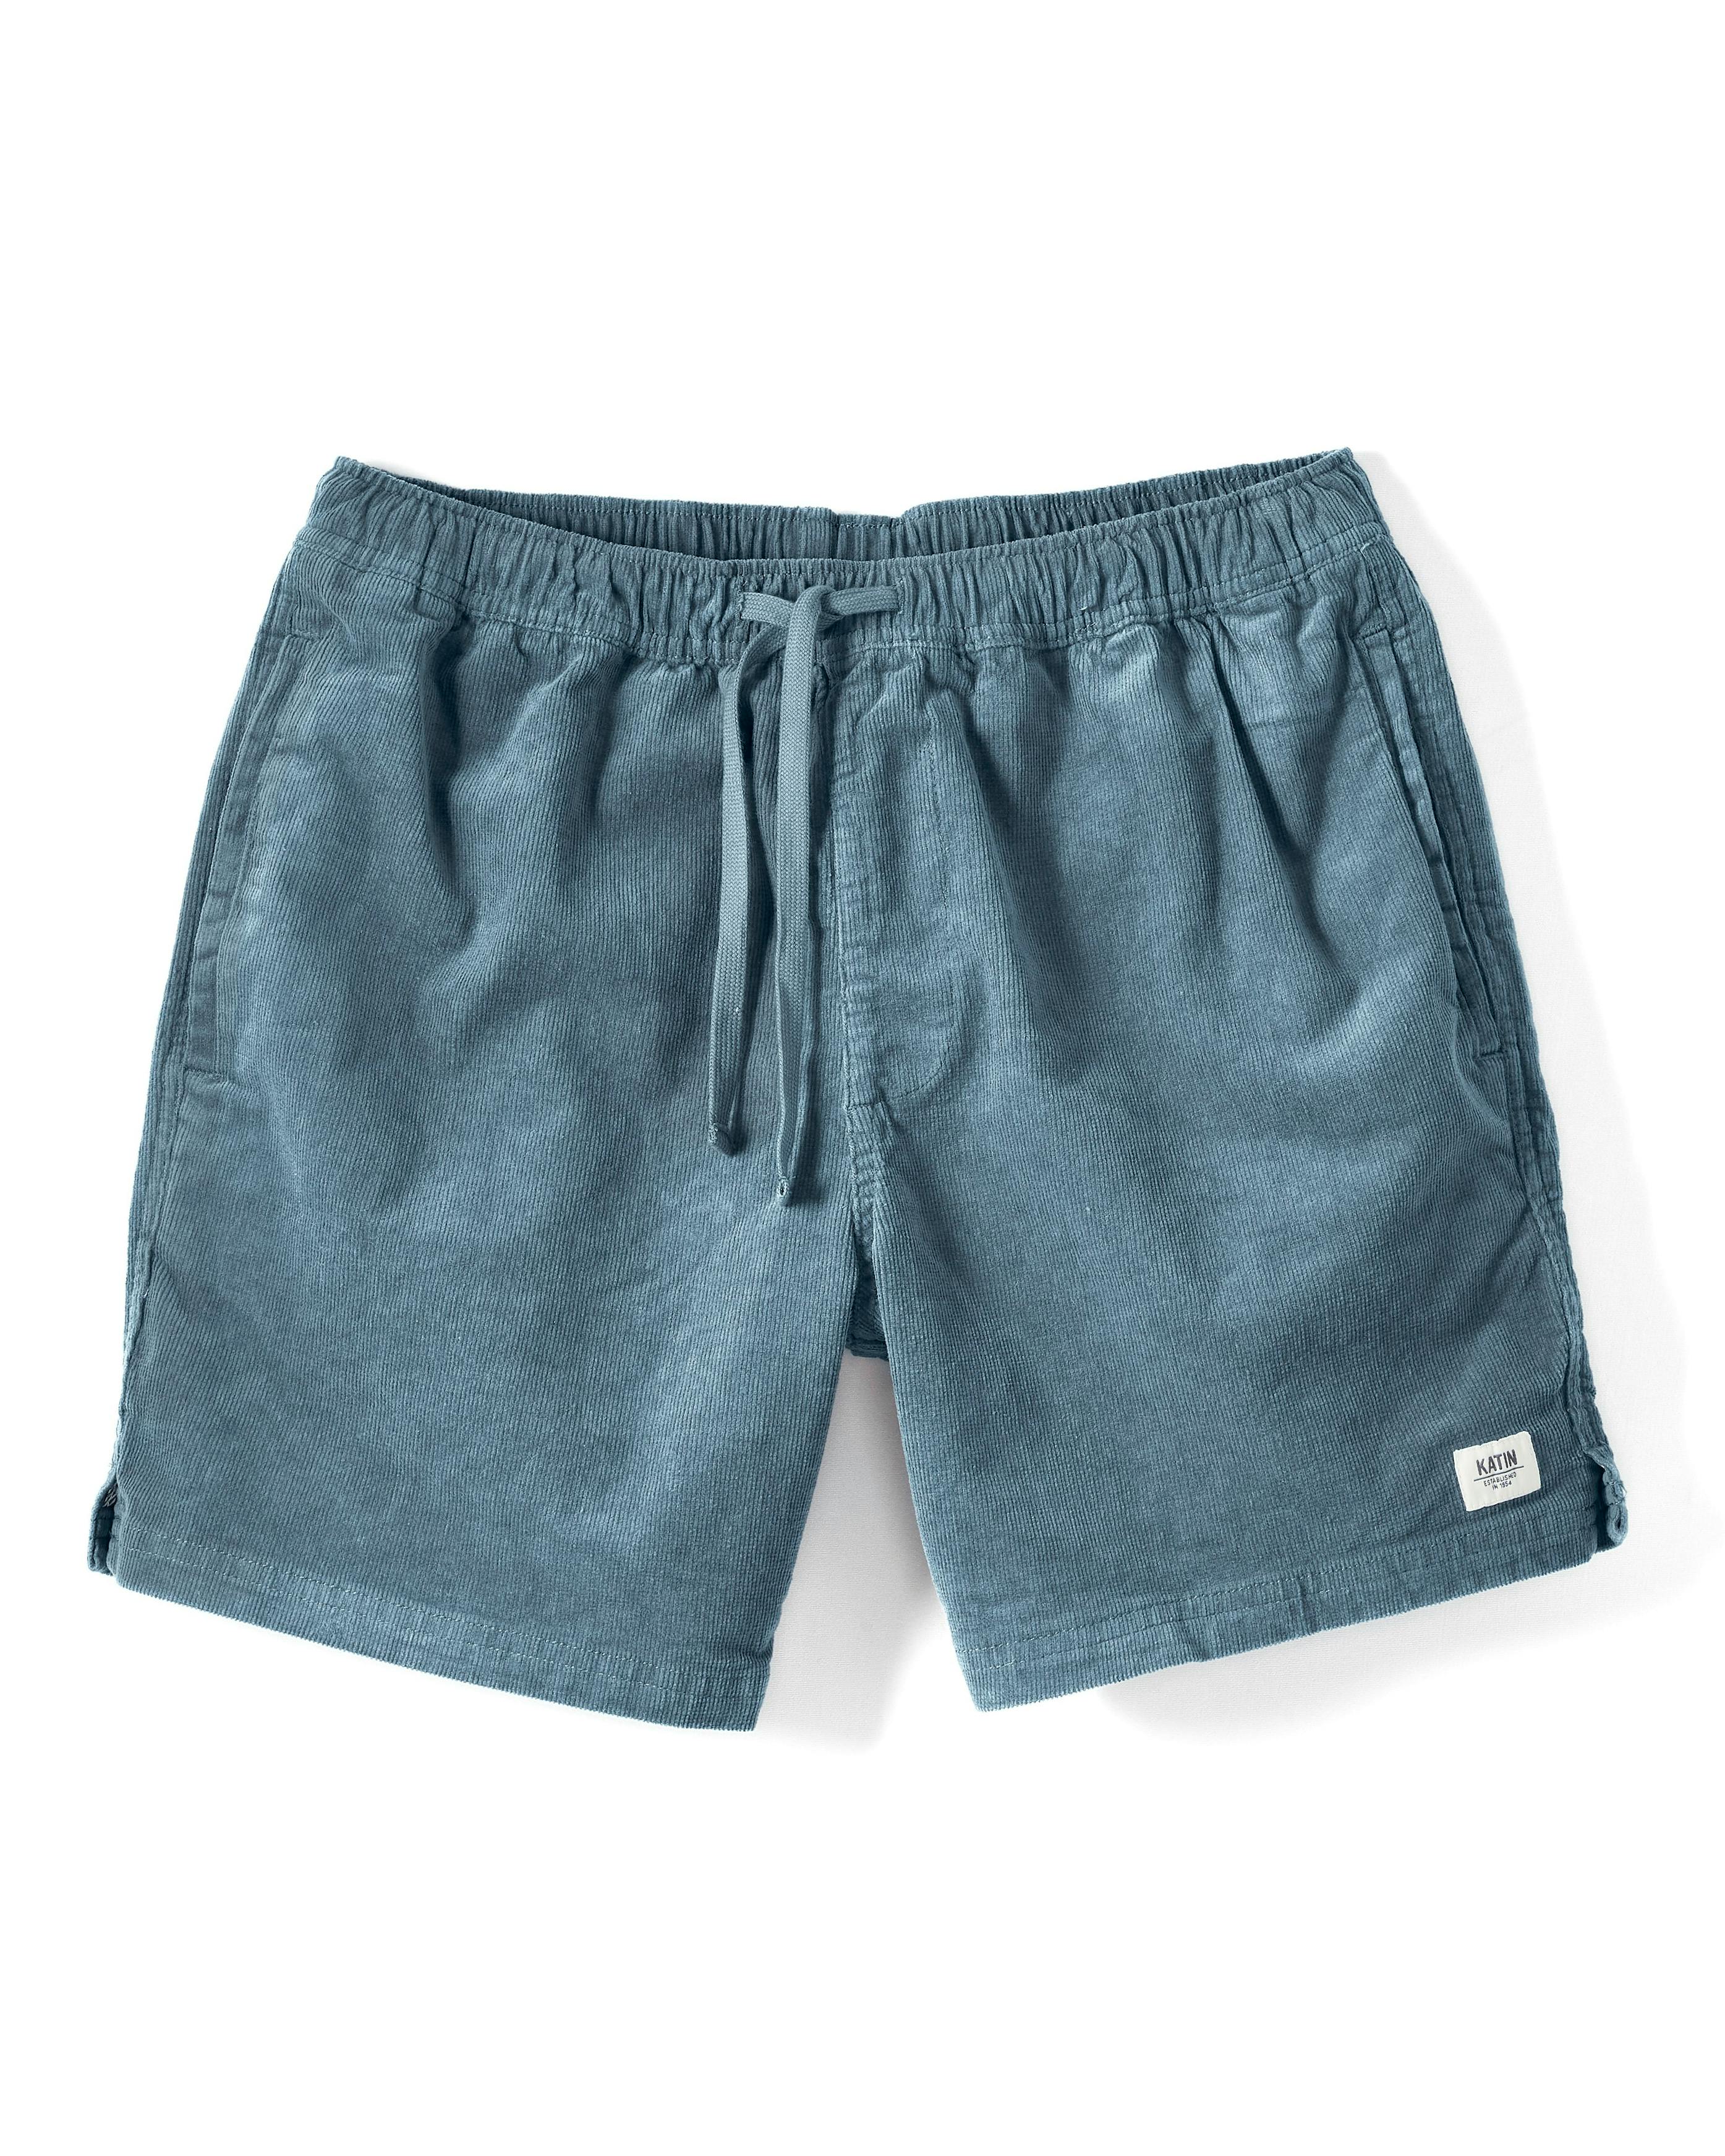 Katin Cord Local Short - 6.5 - Overcast, Casual Shorts